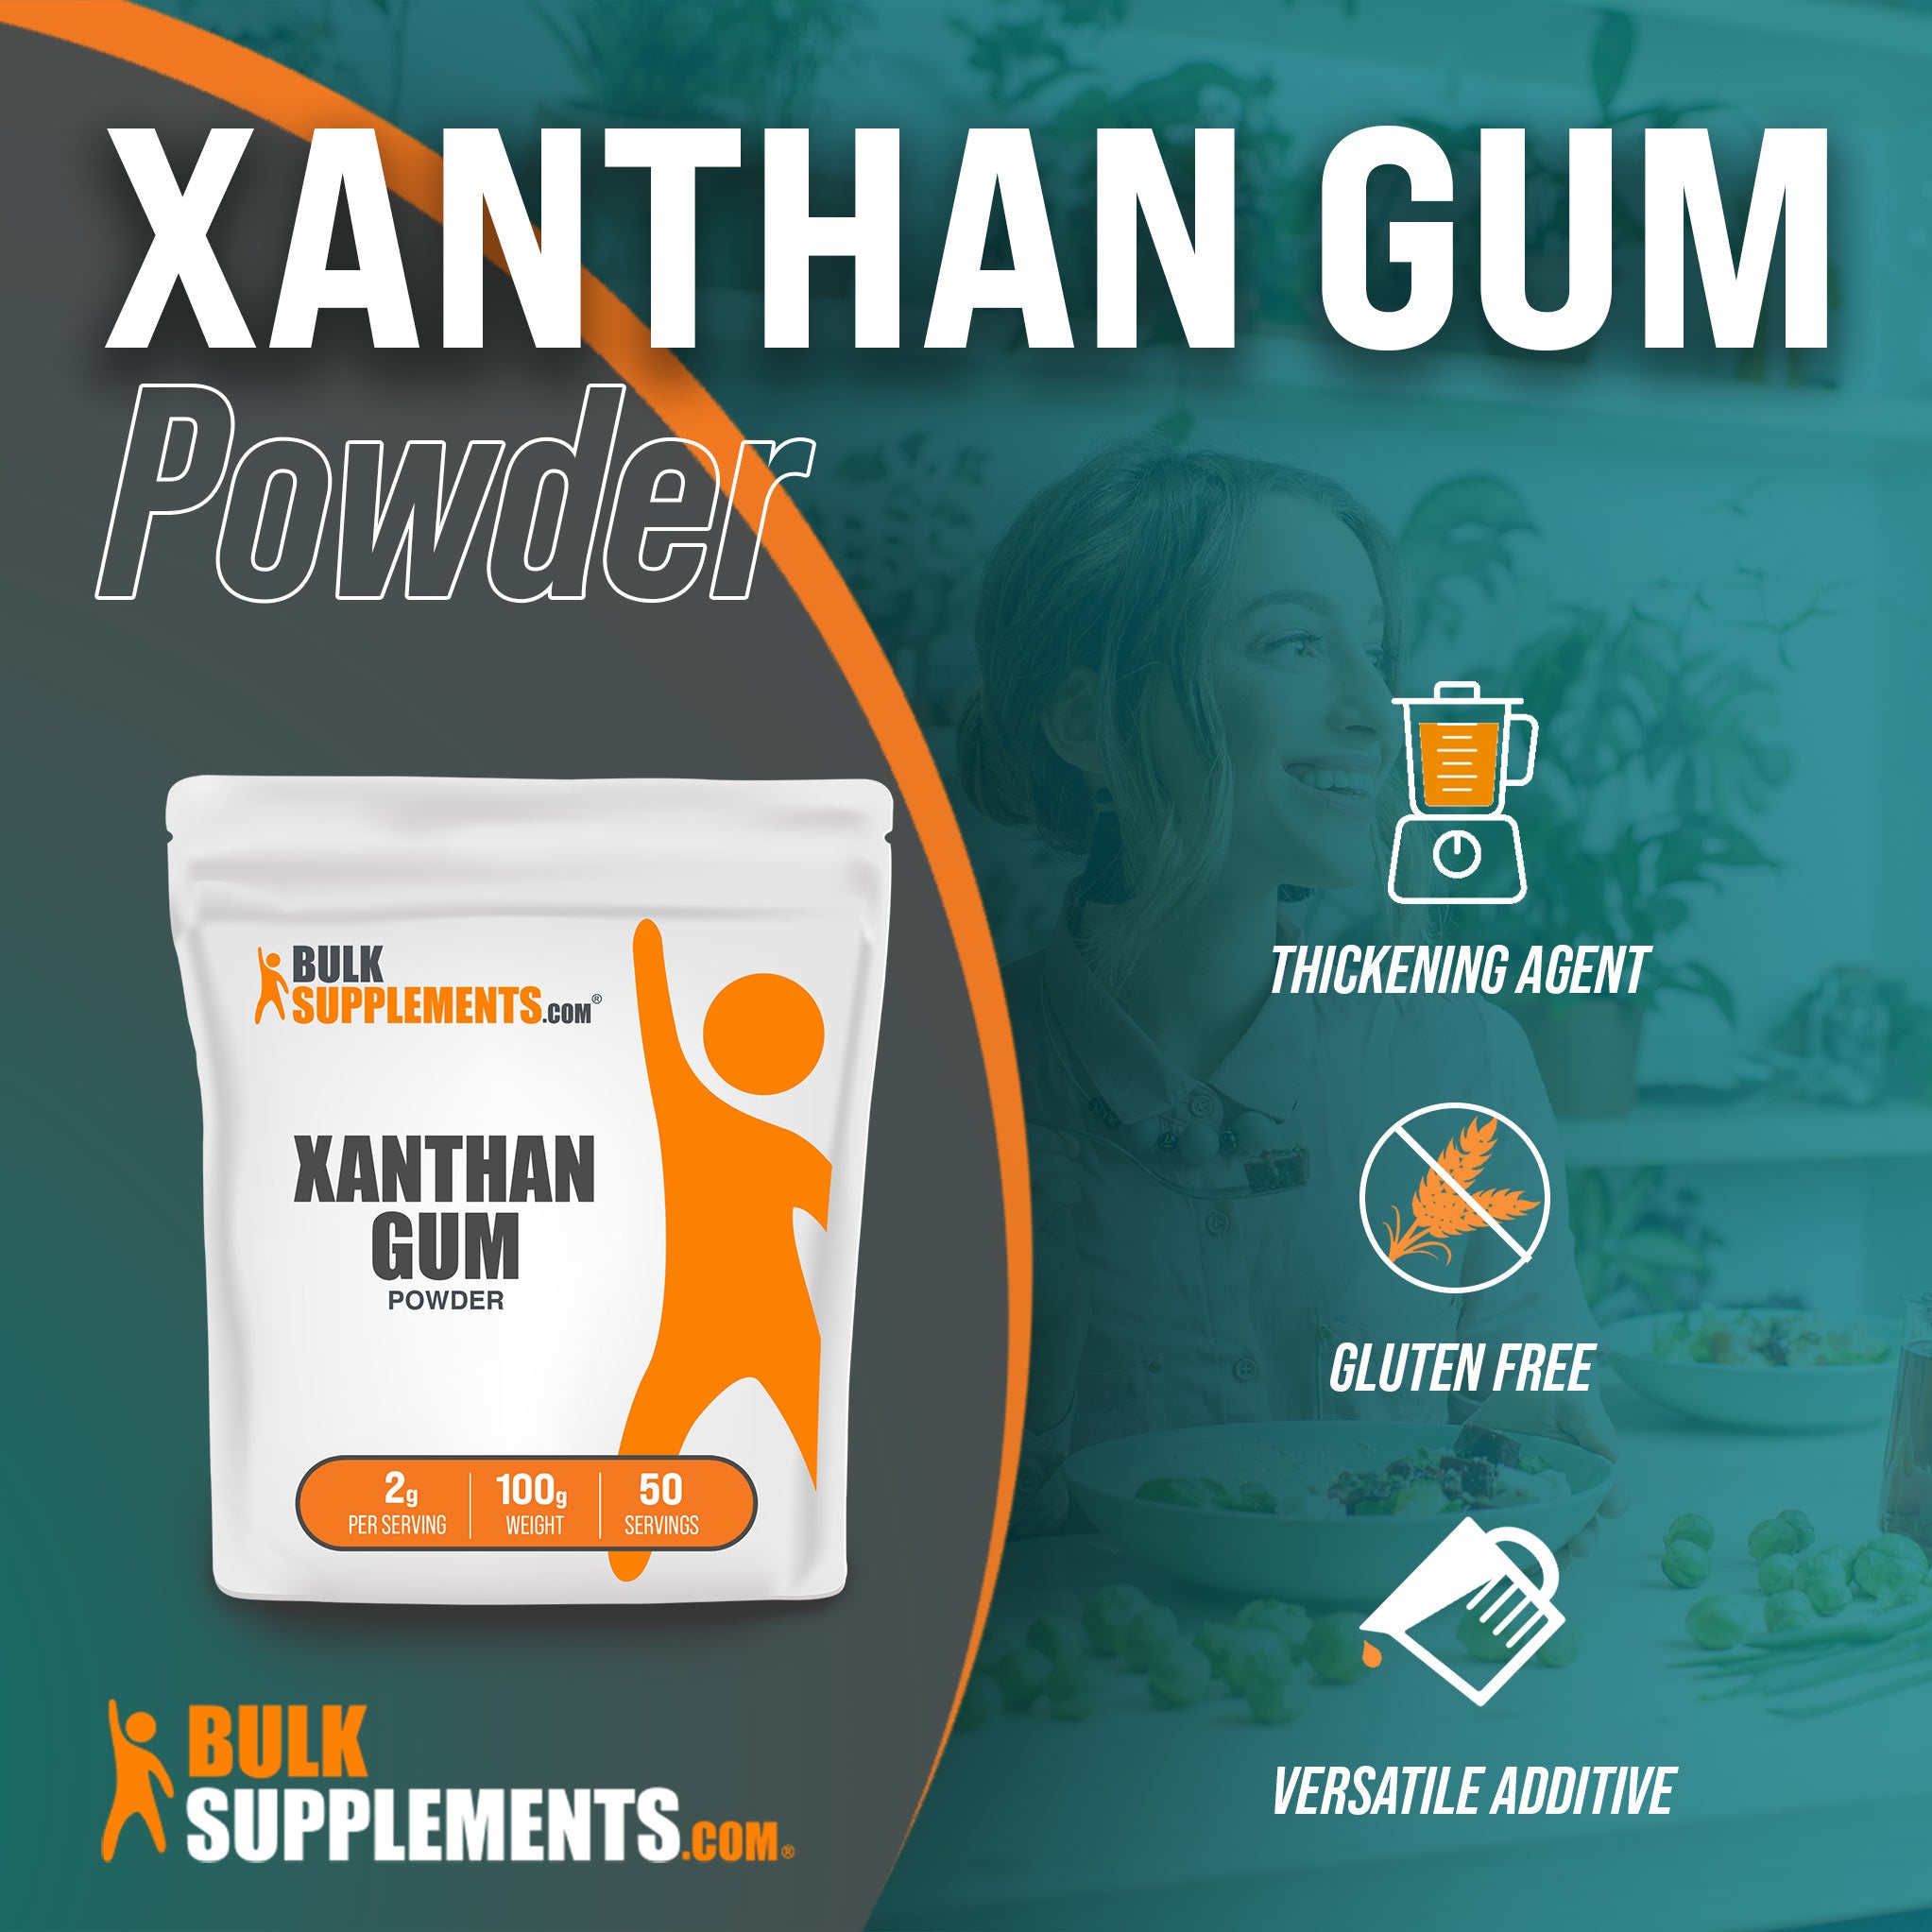 Benefits of Xanthan Gum from BulkSupplements